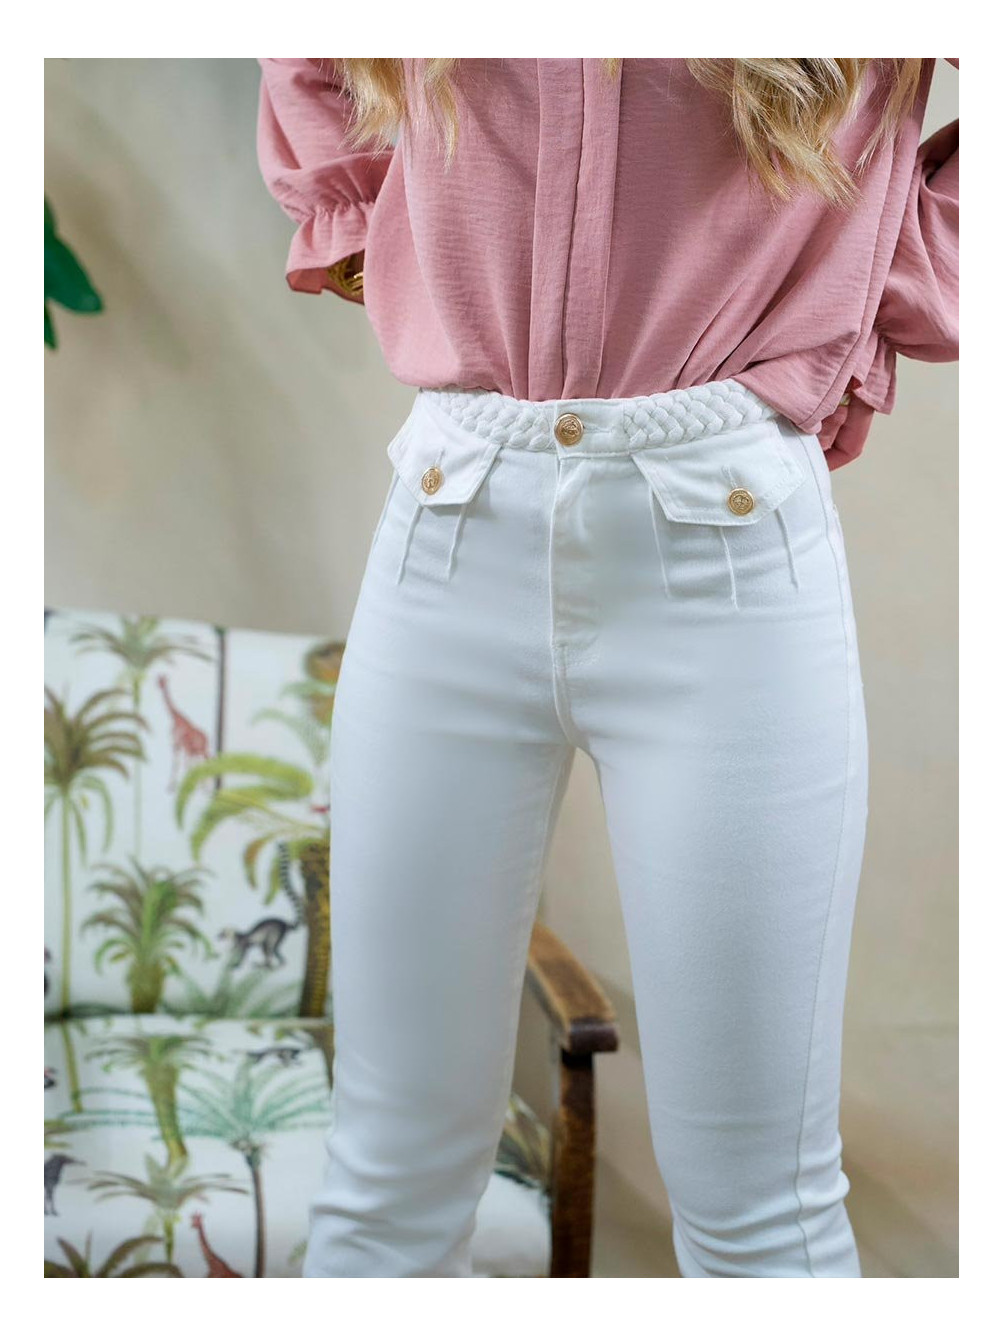 Jeans Trenzada | Jeans Blanco Mujer Mariquita Trasquilá